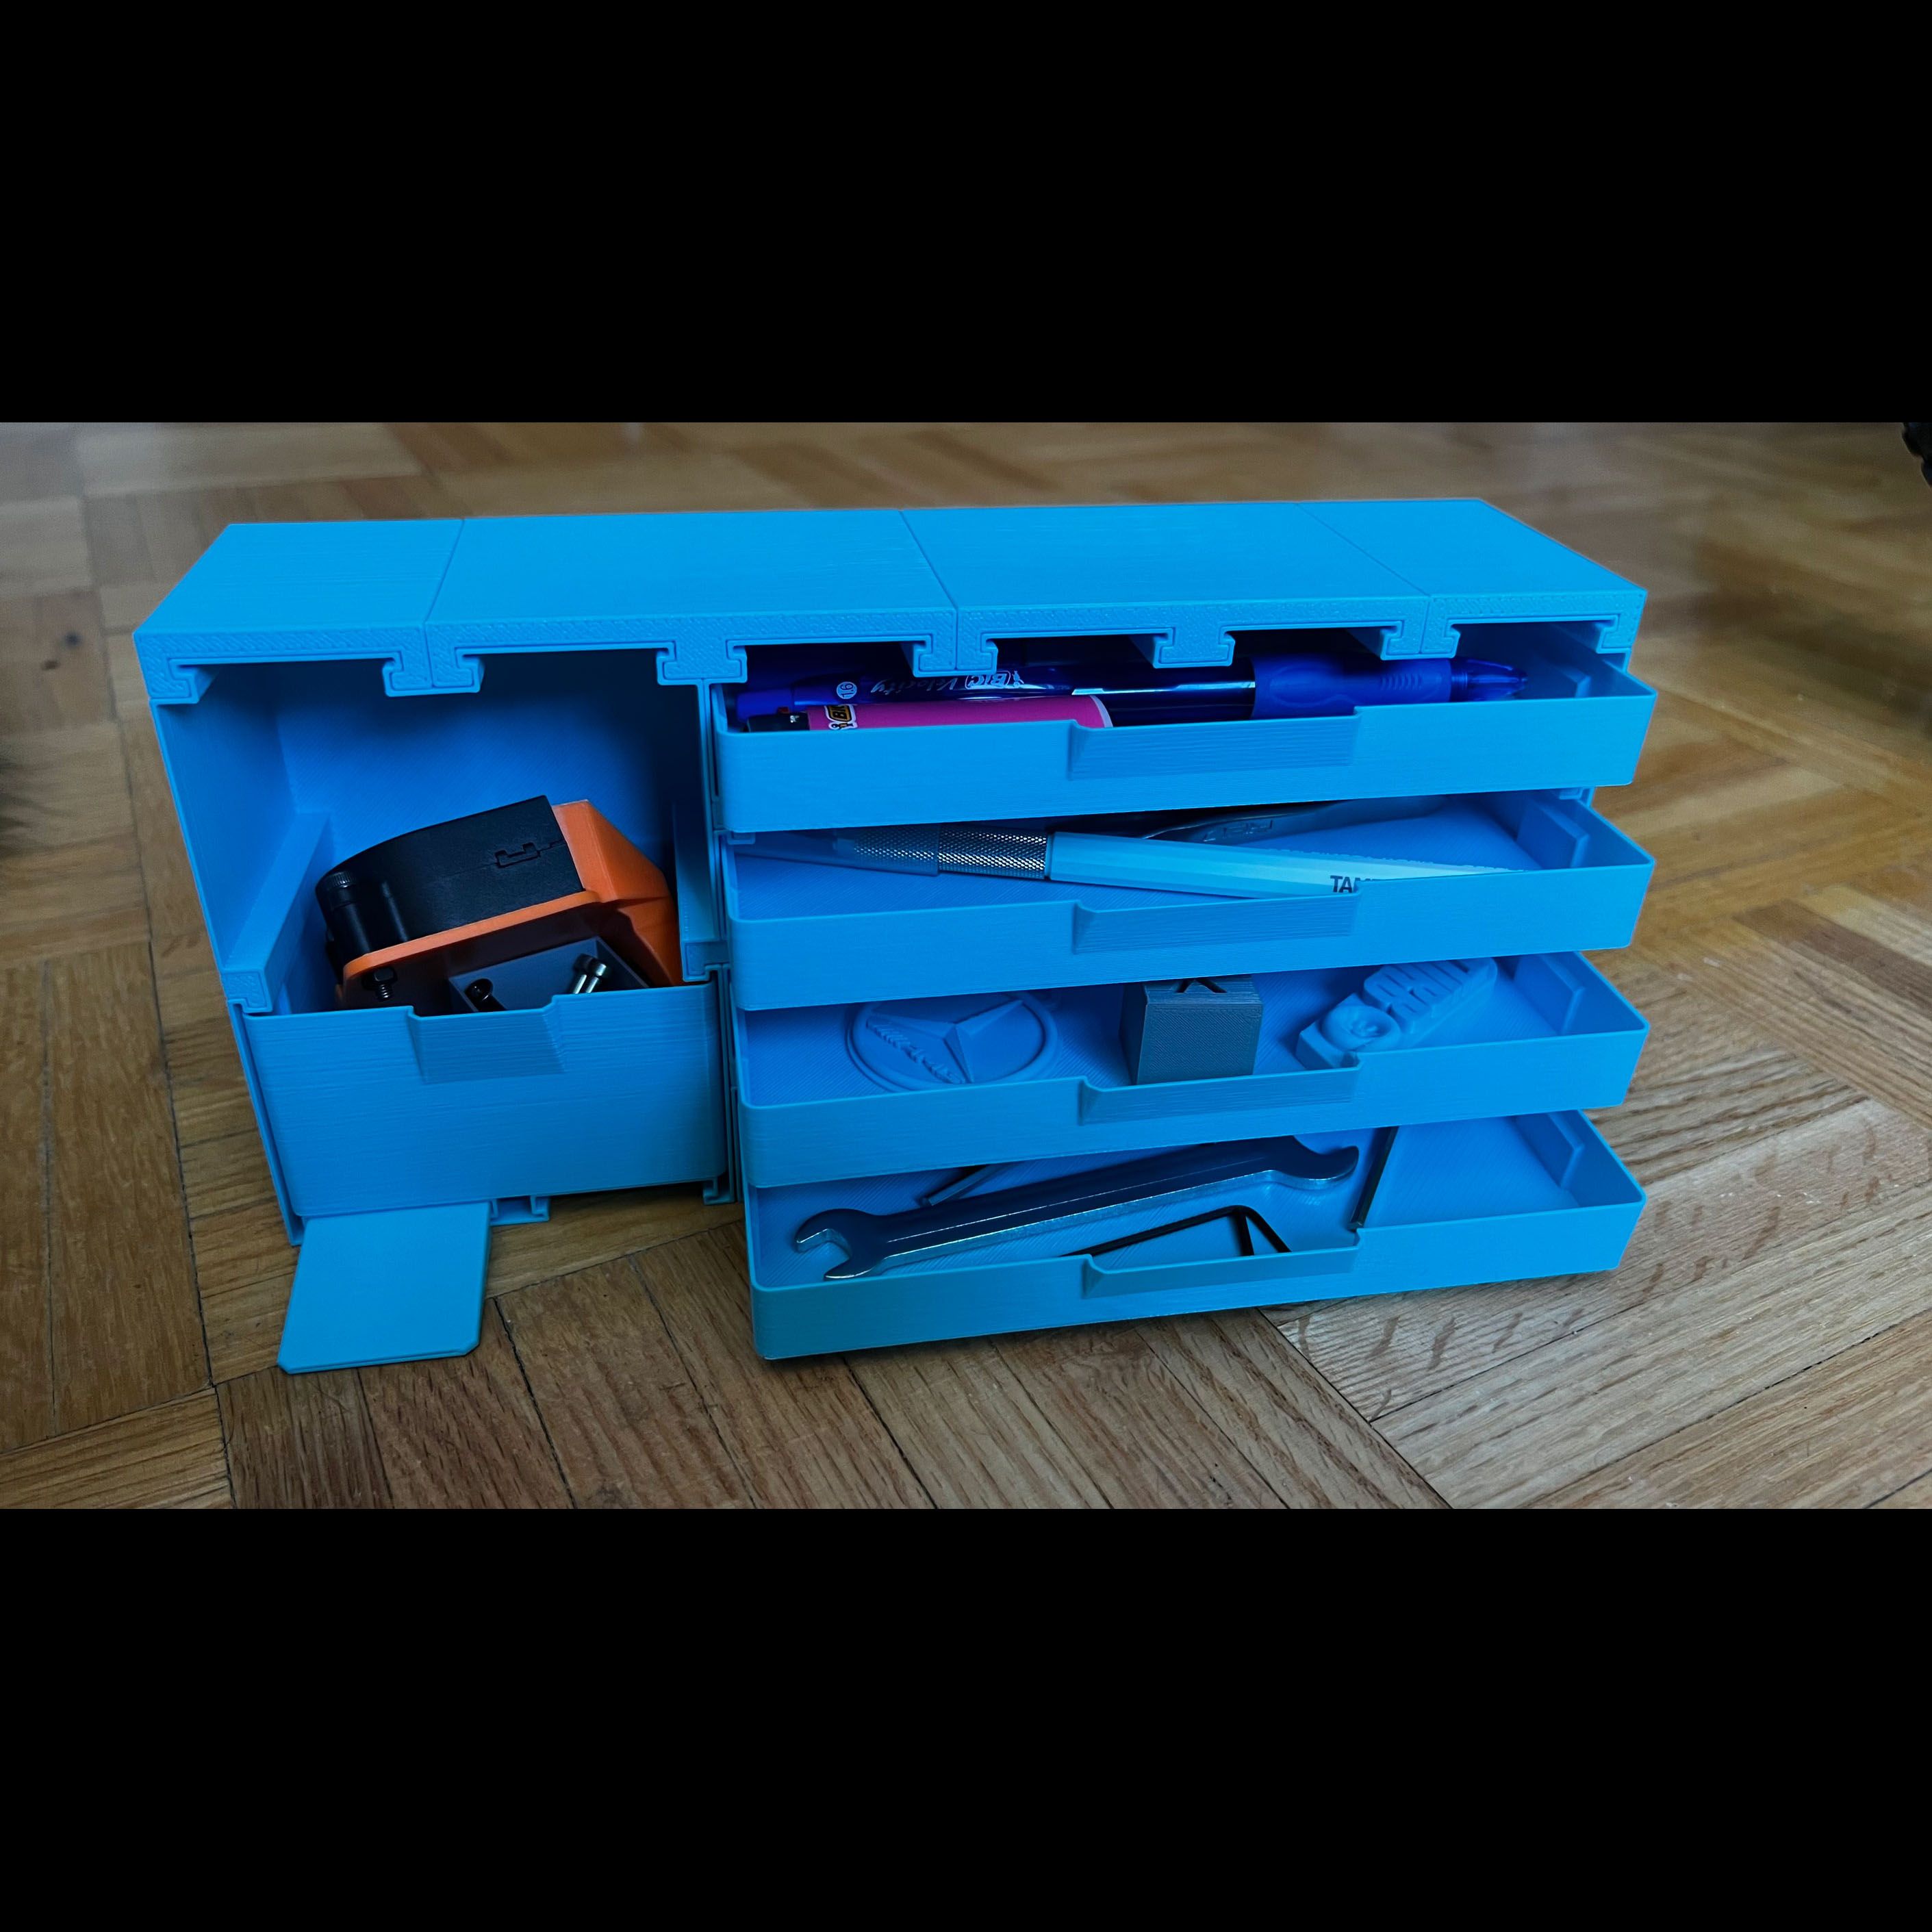 3D printer Fastprint modular storage drawer system • made with